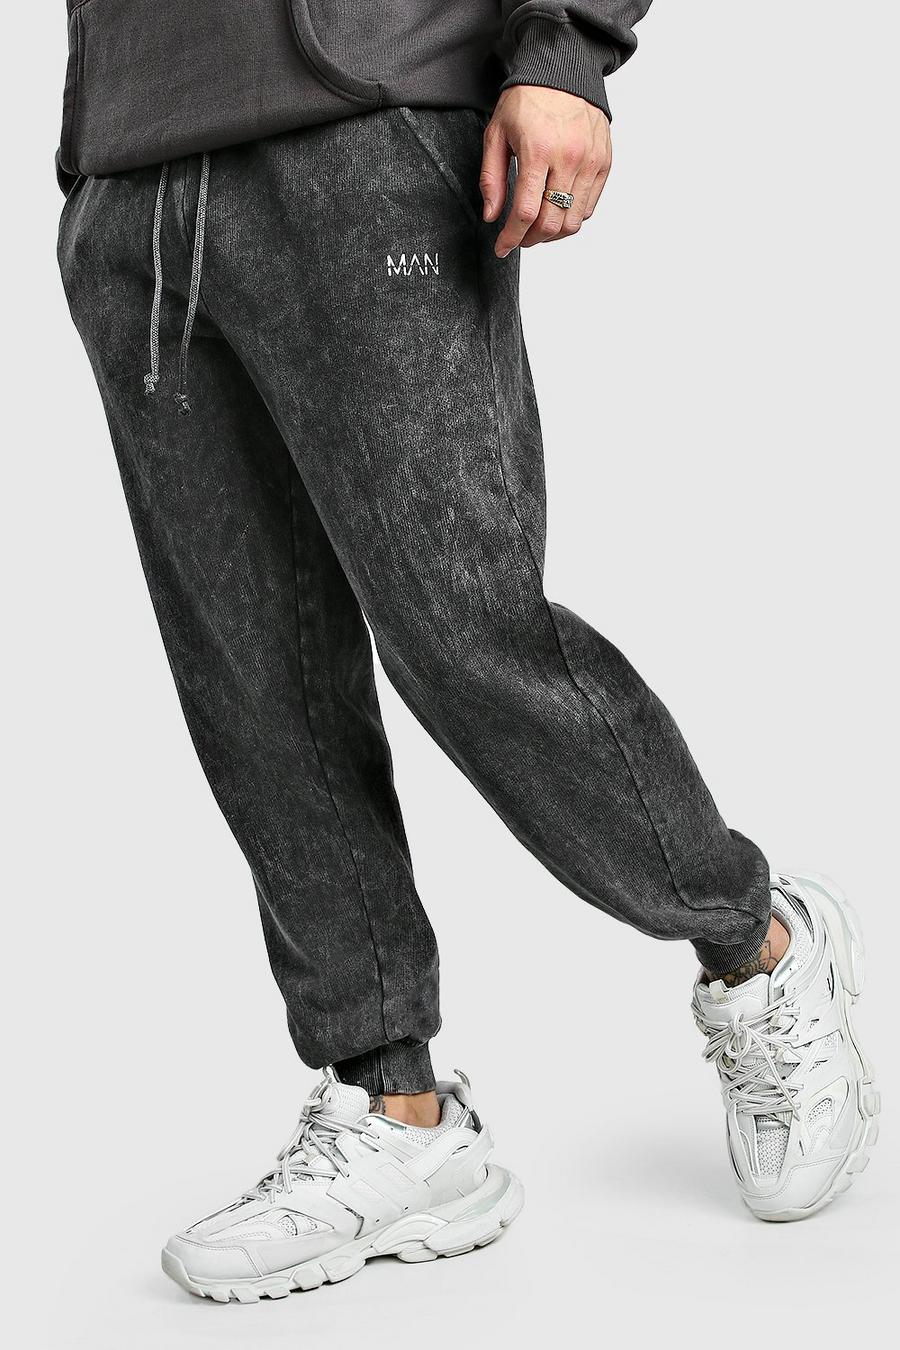  Pantalones deportivos grises para correr, estilo